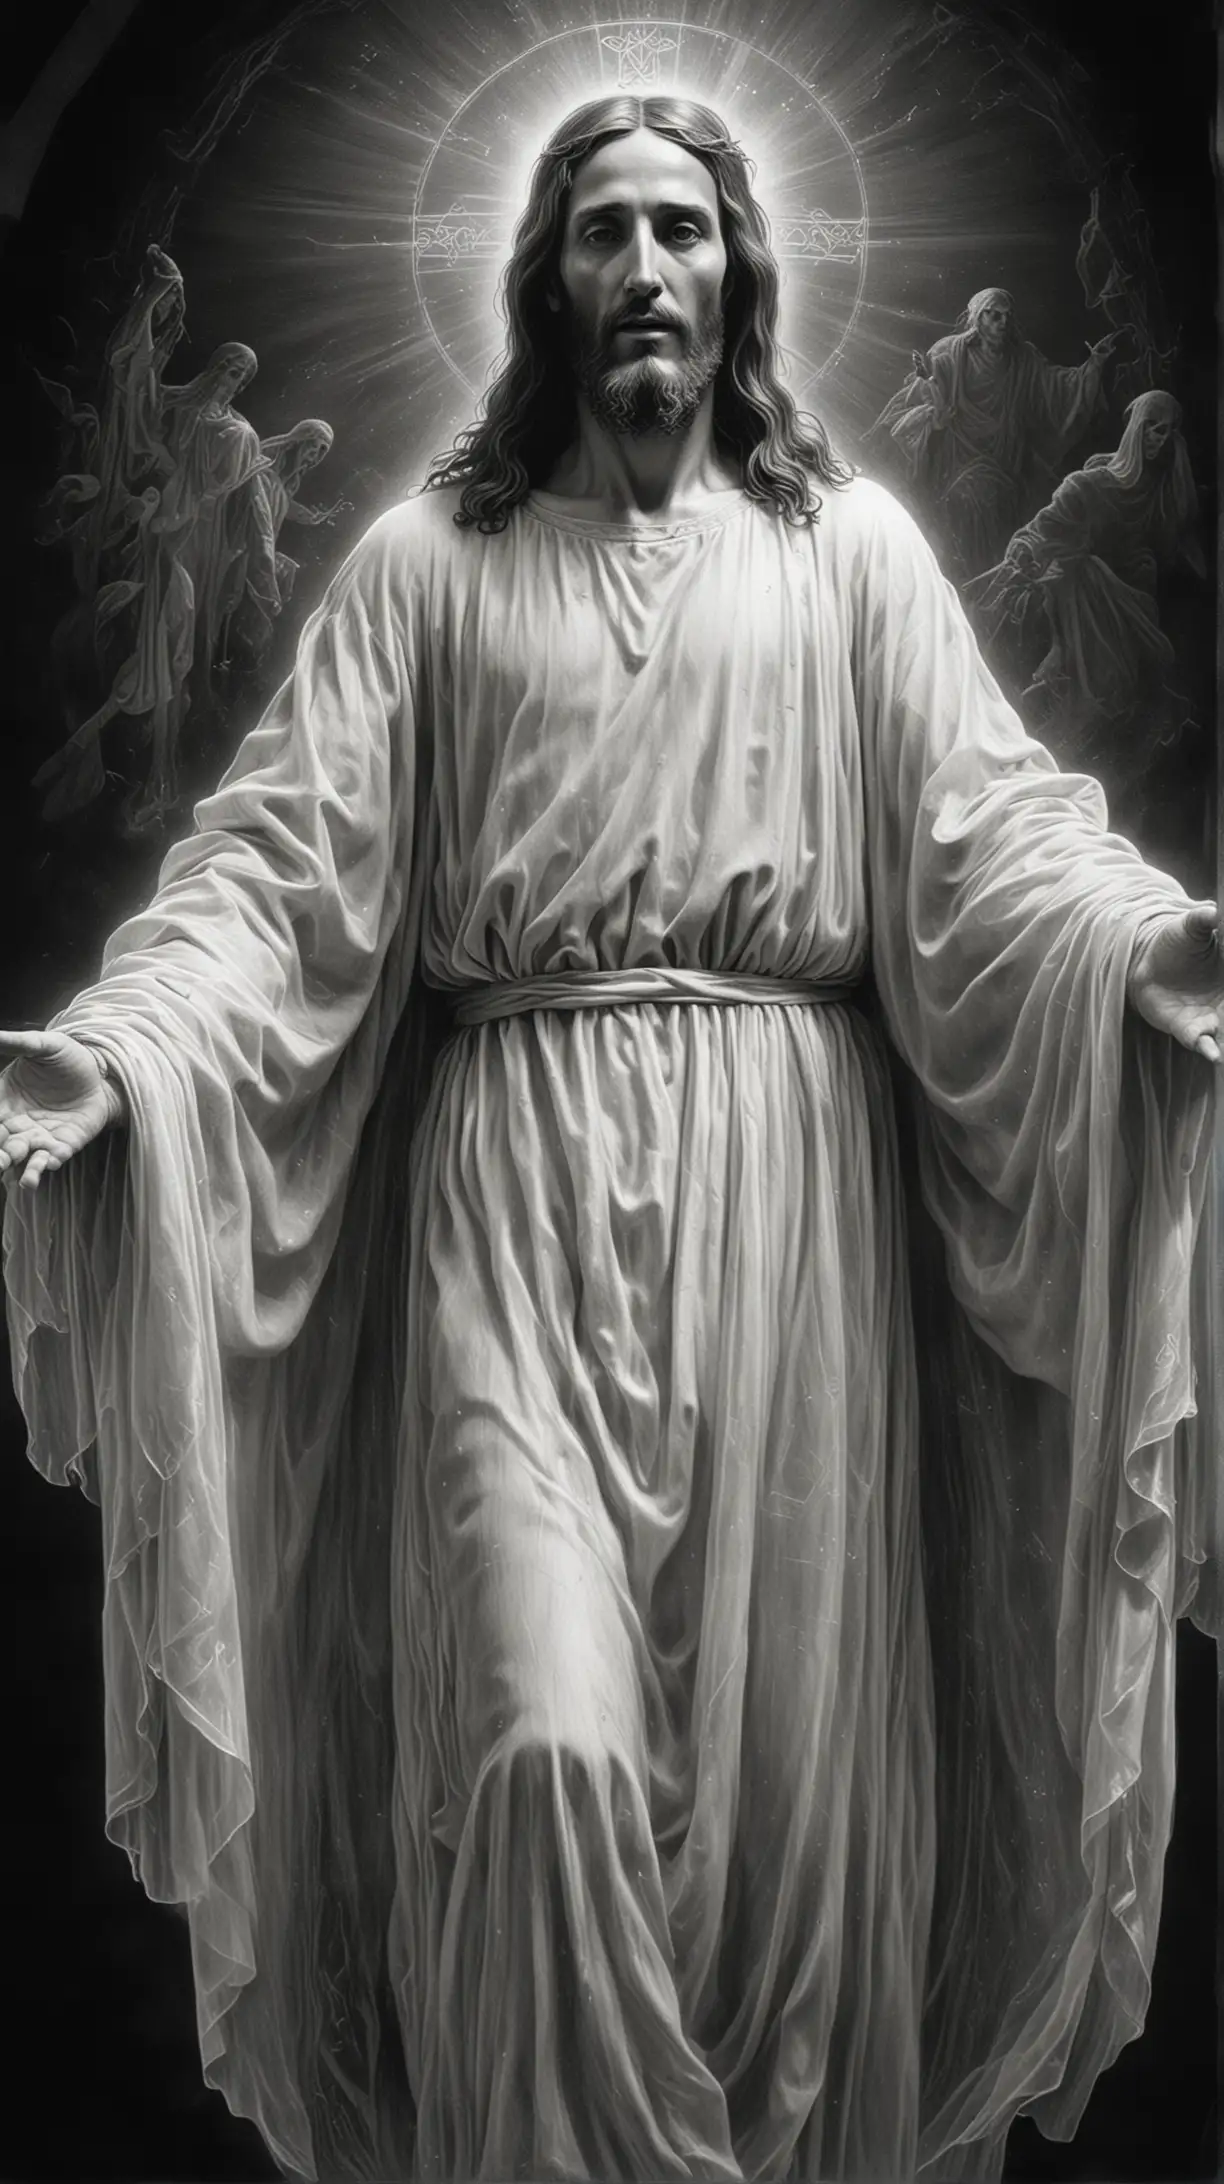 Hyperdetailed Illustration of Luminous Transparent Ghost of Jesus Christ